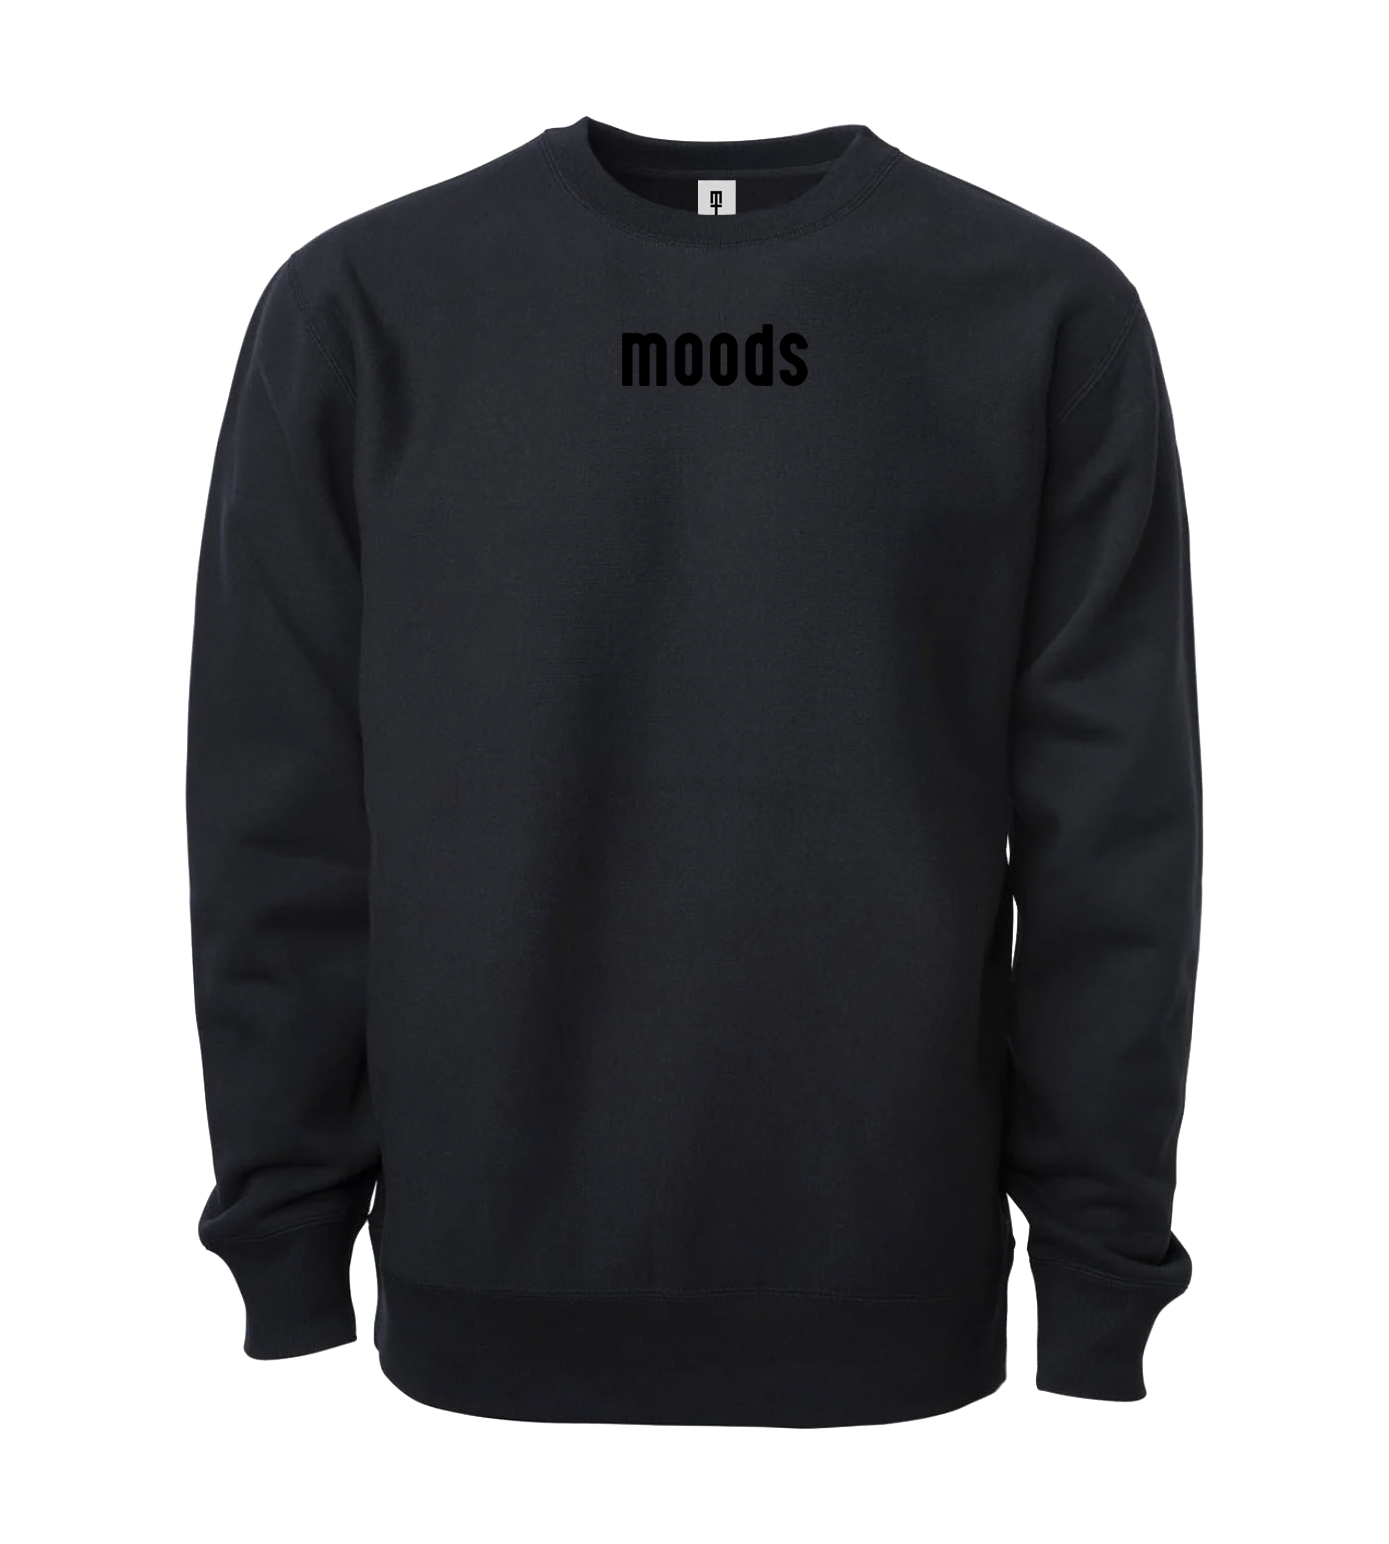 Moods Embroidered Crewneck (Black)